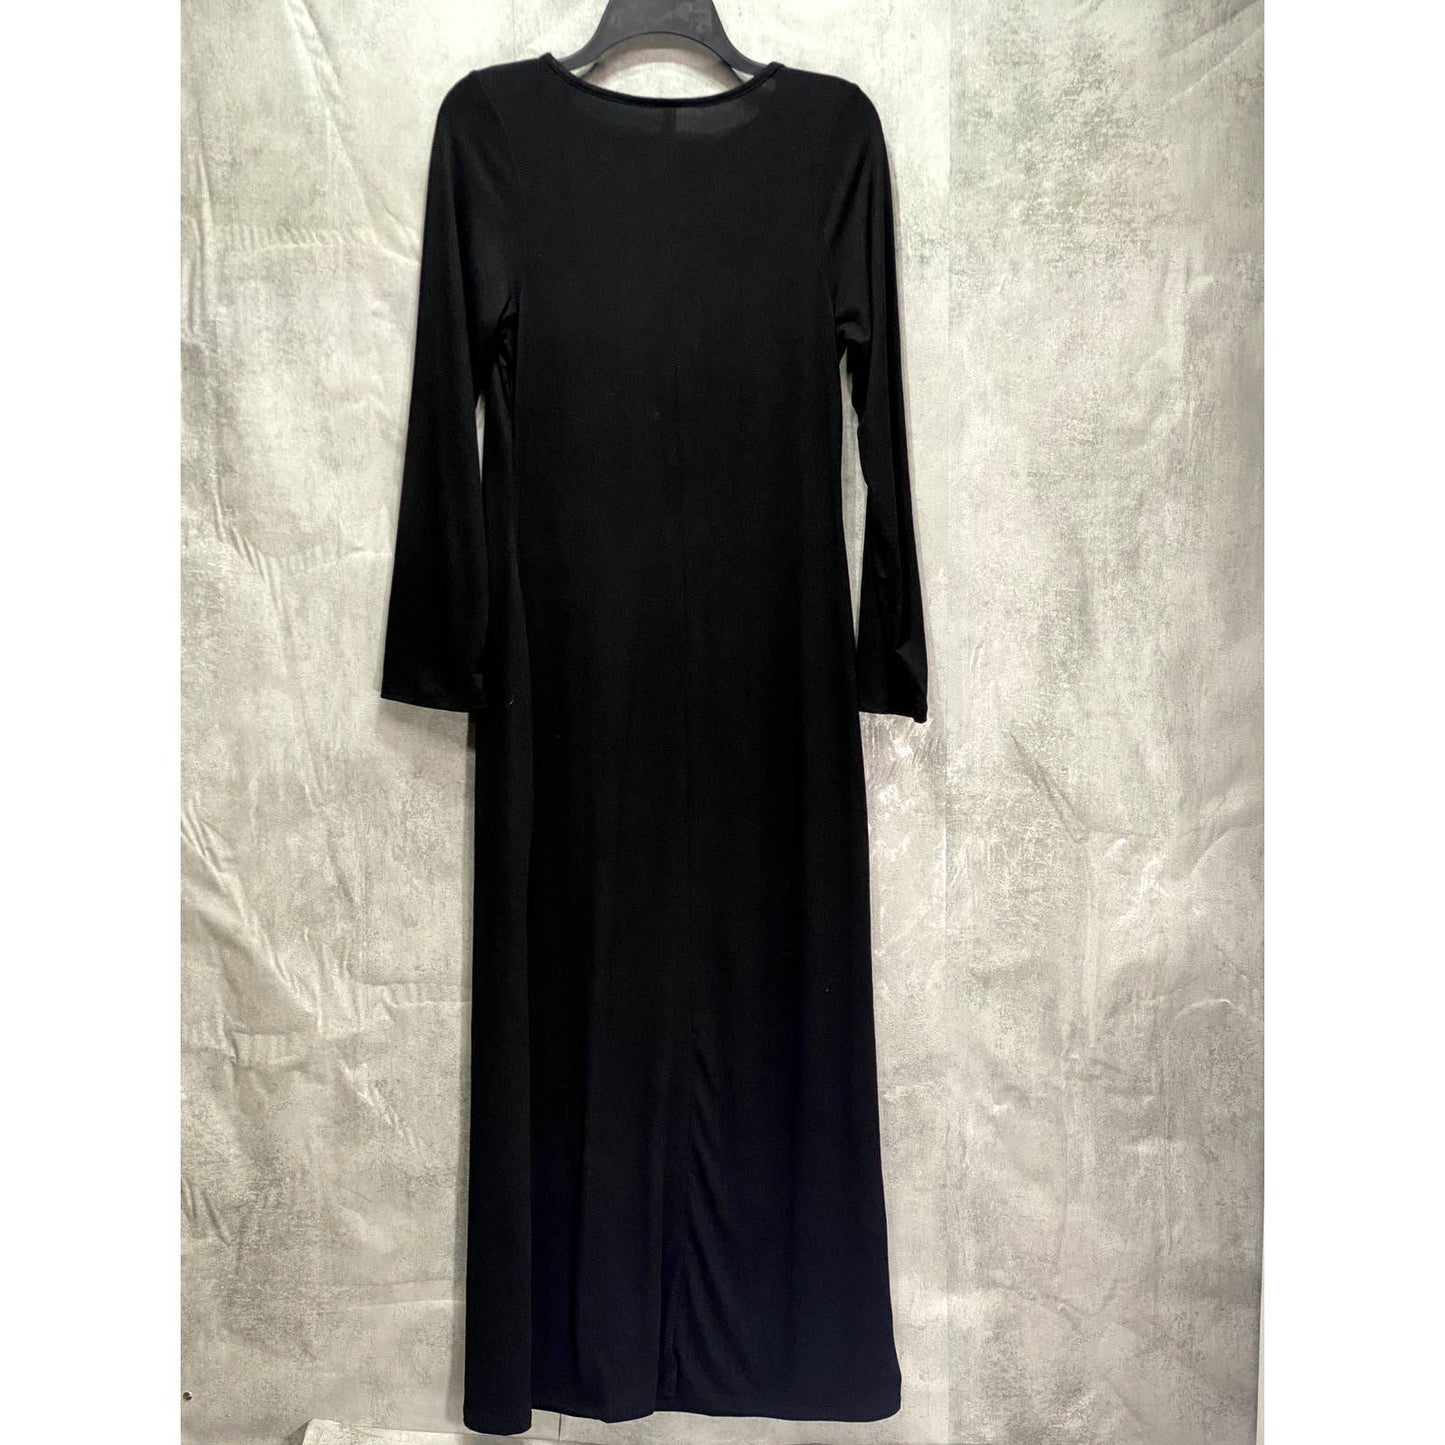 24SEVEN COMFORT APPAREL Solid Black Fitted Long Sleeve Side Slit Maxi Dress SZ XL